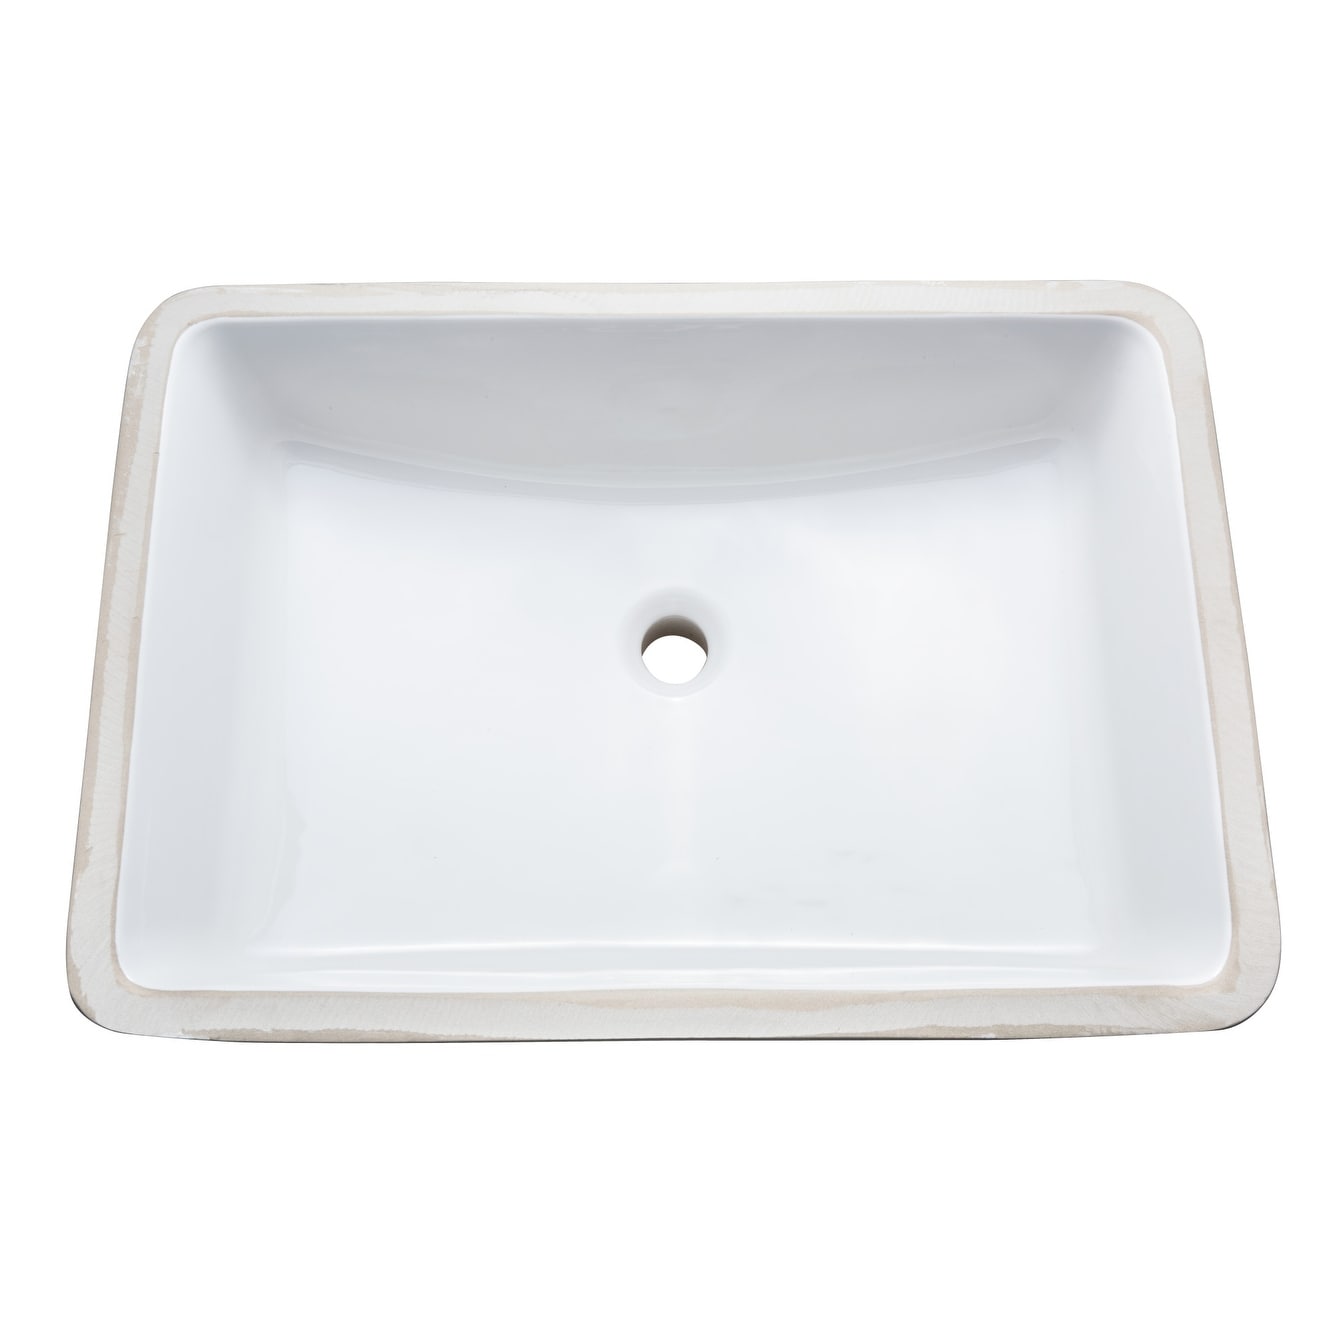 Proflo Pf2114ua Undermount Bathroom Sink White